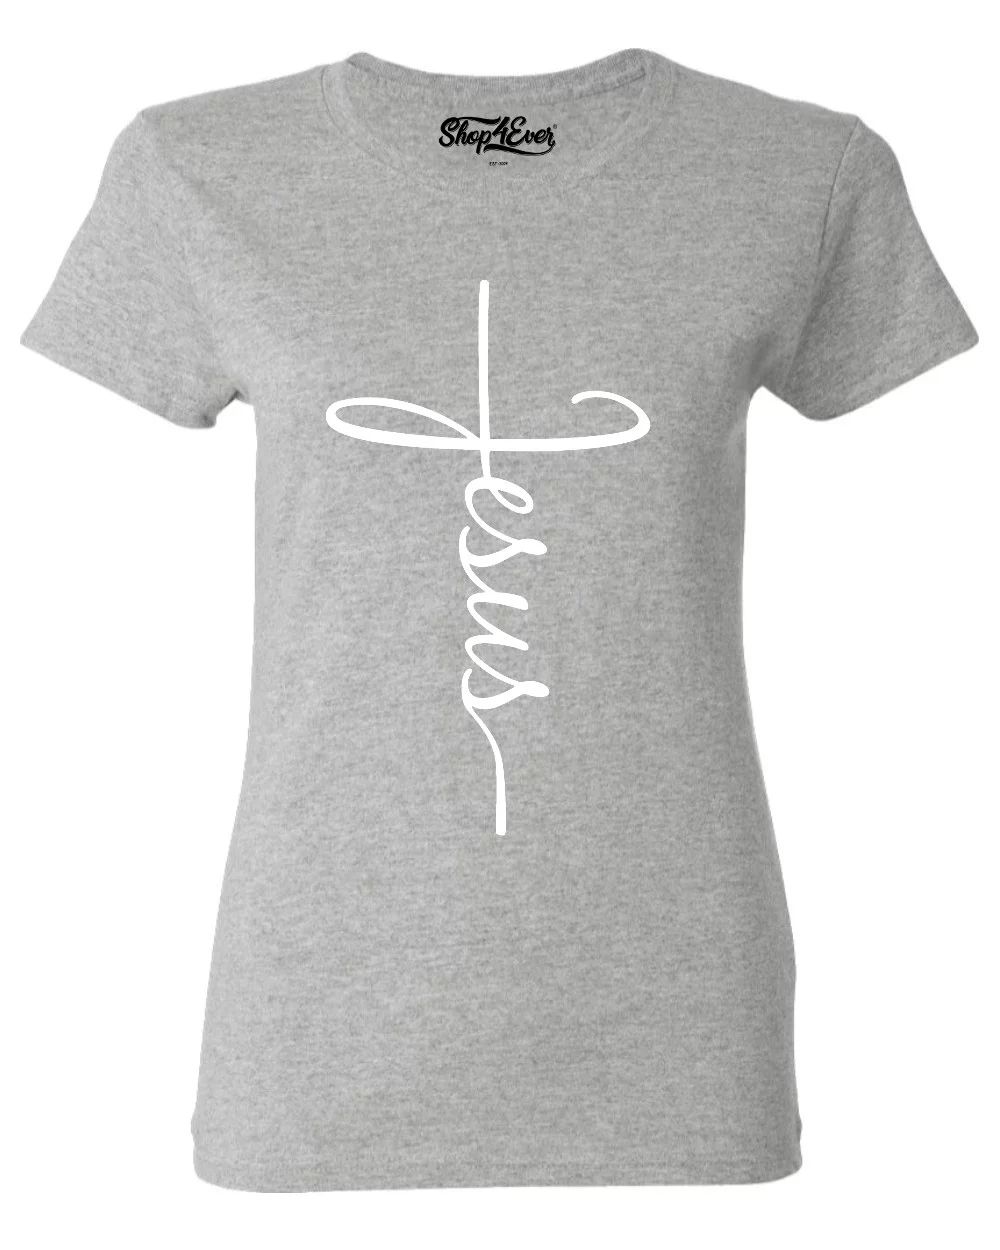 Shop4Ever Women's Jesus Cross Religious Graphic T-Shirt Small Sports Grey | Walmart (US)